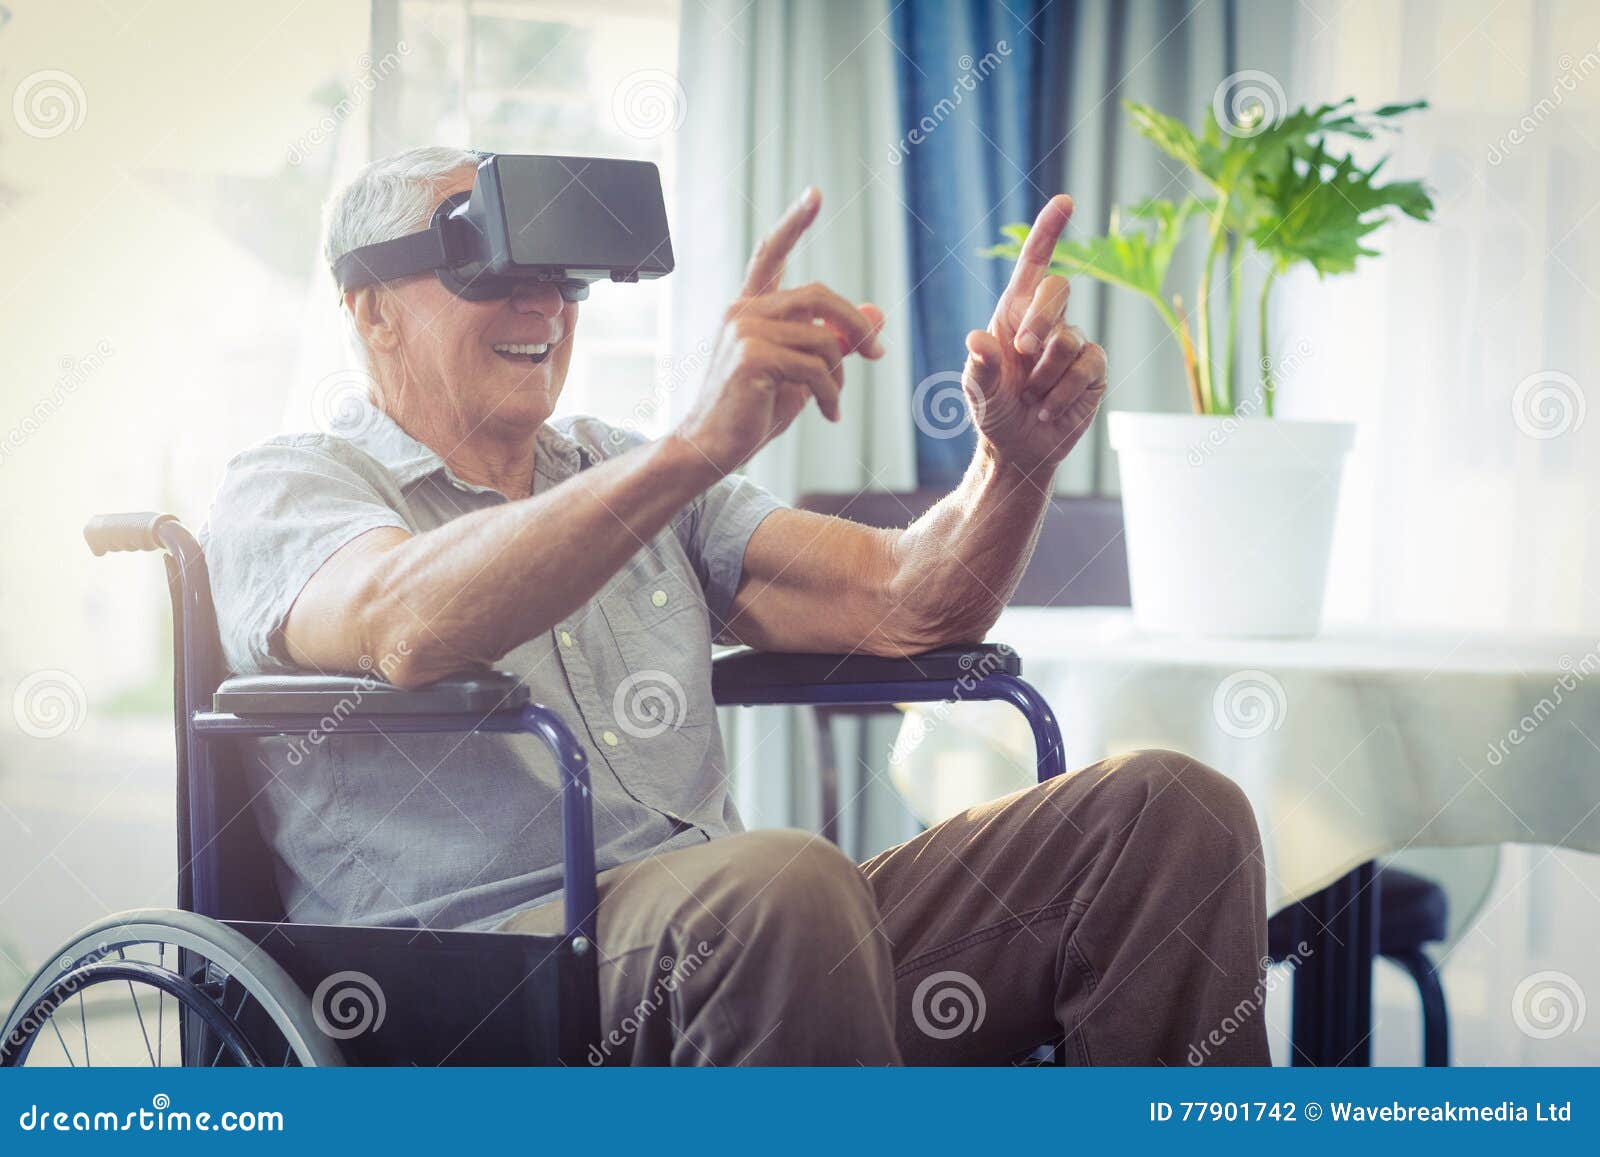 happy senior man on wheelchair using vr headset